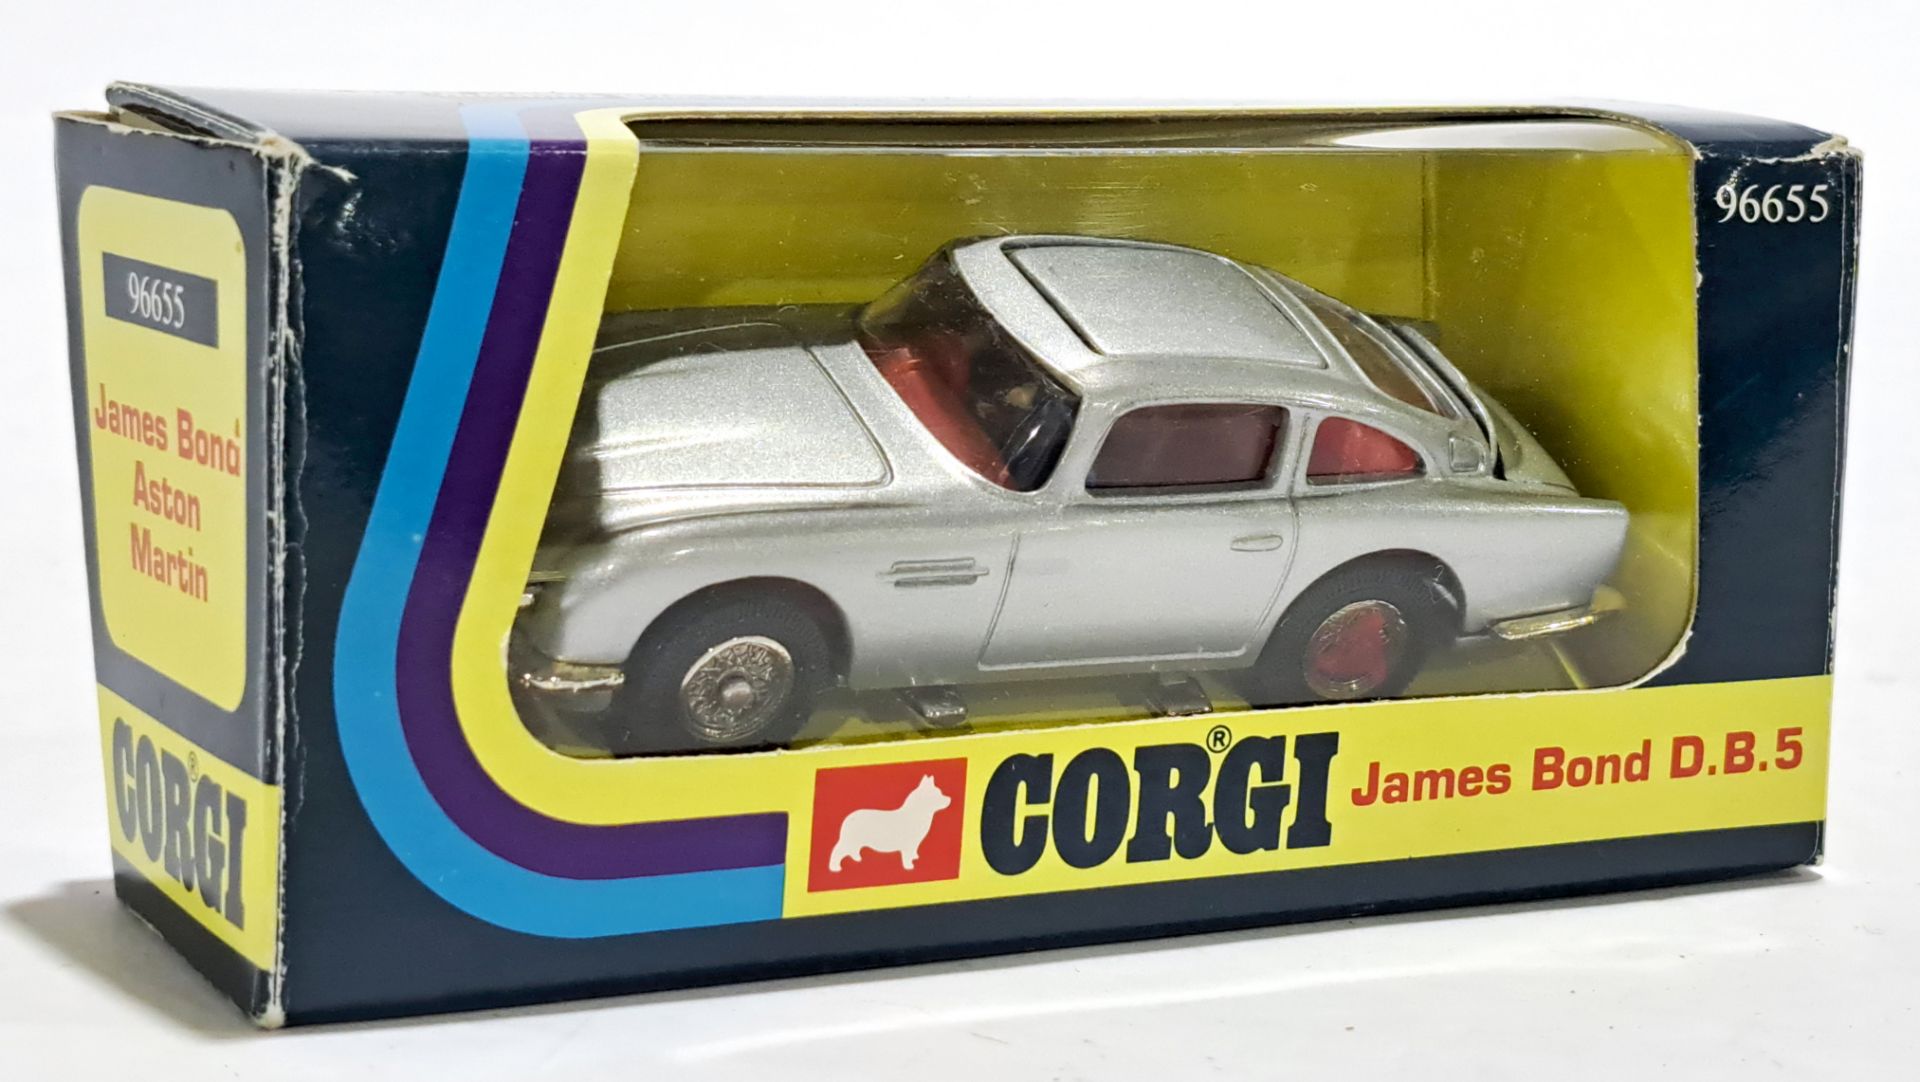 Corgi, 96655 James Bond Aston Martin D.B.5. (1995 re-issue)